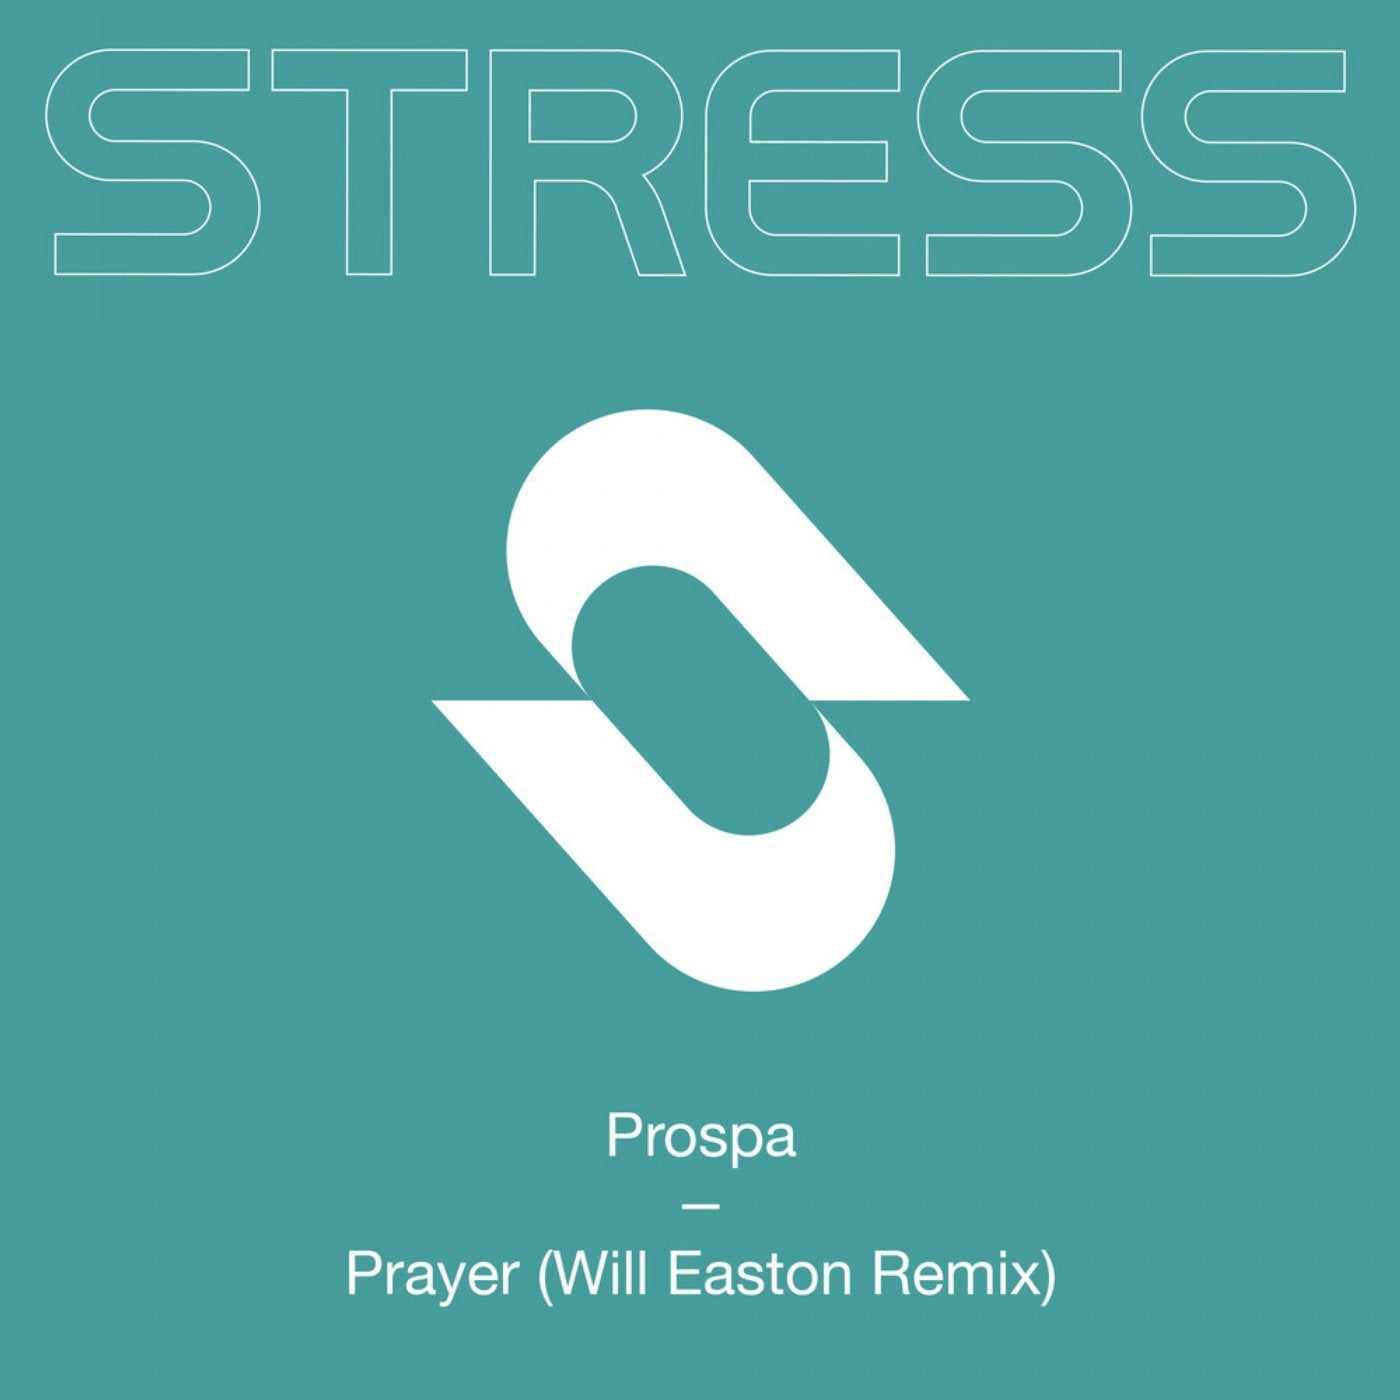 Prayer (Will Easton Remix)